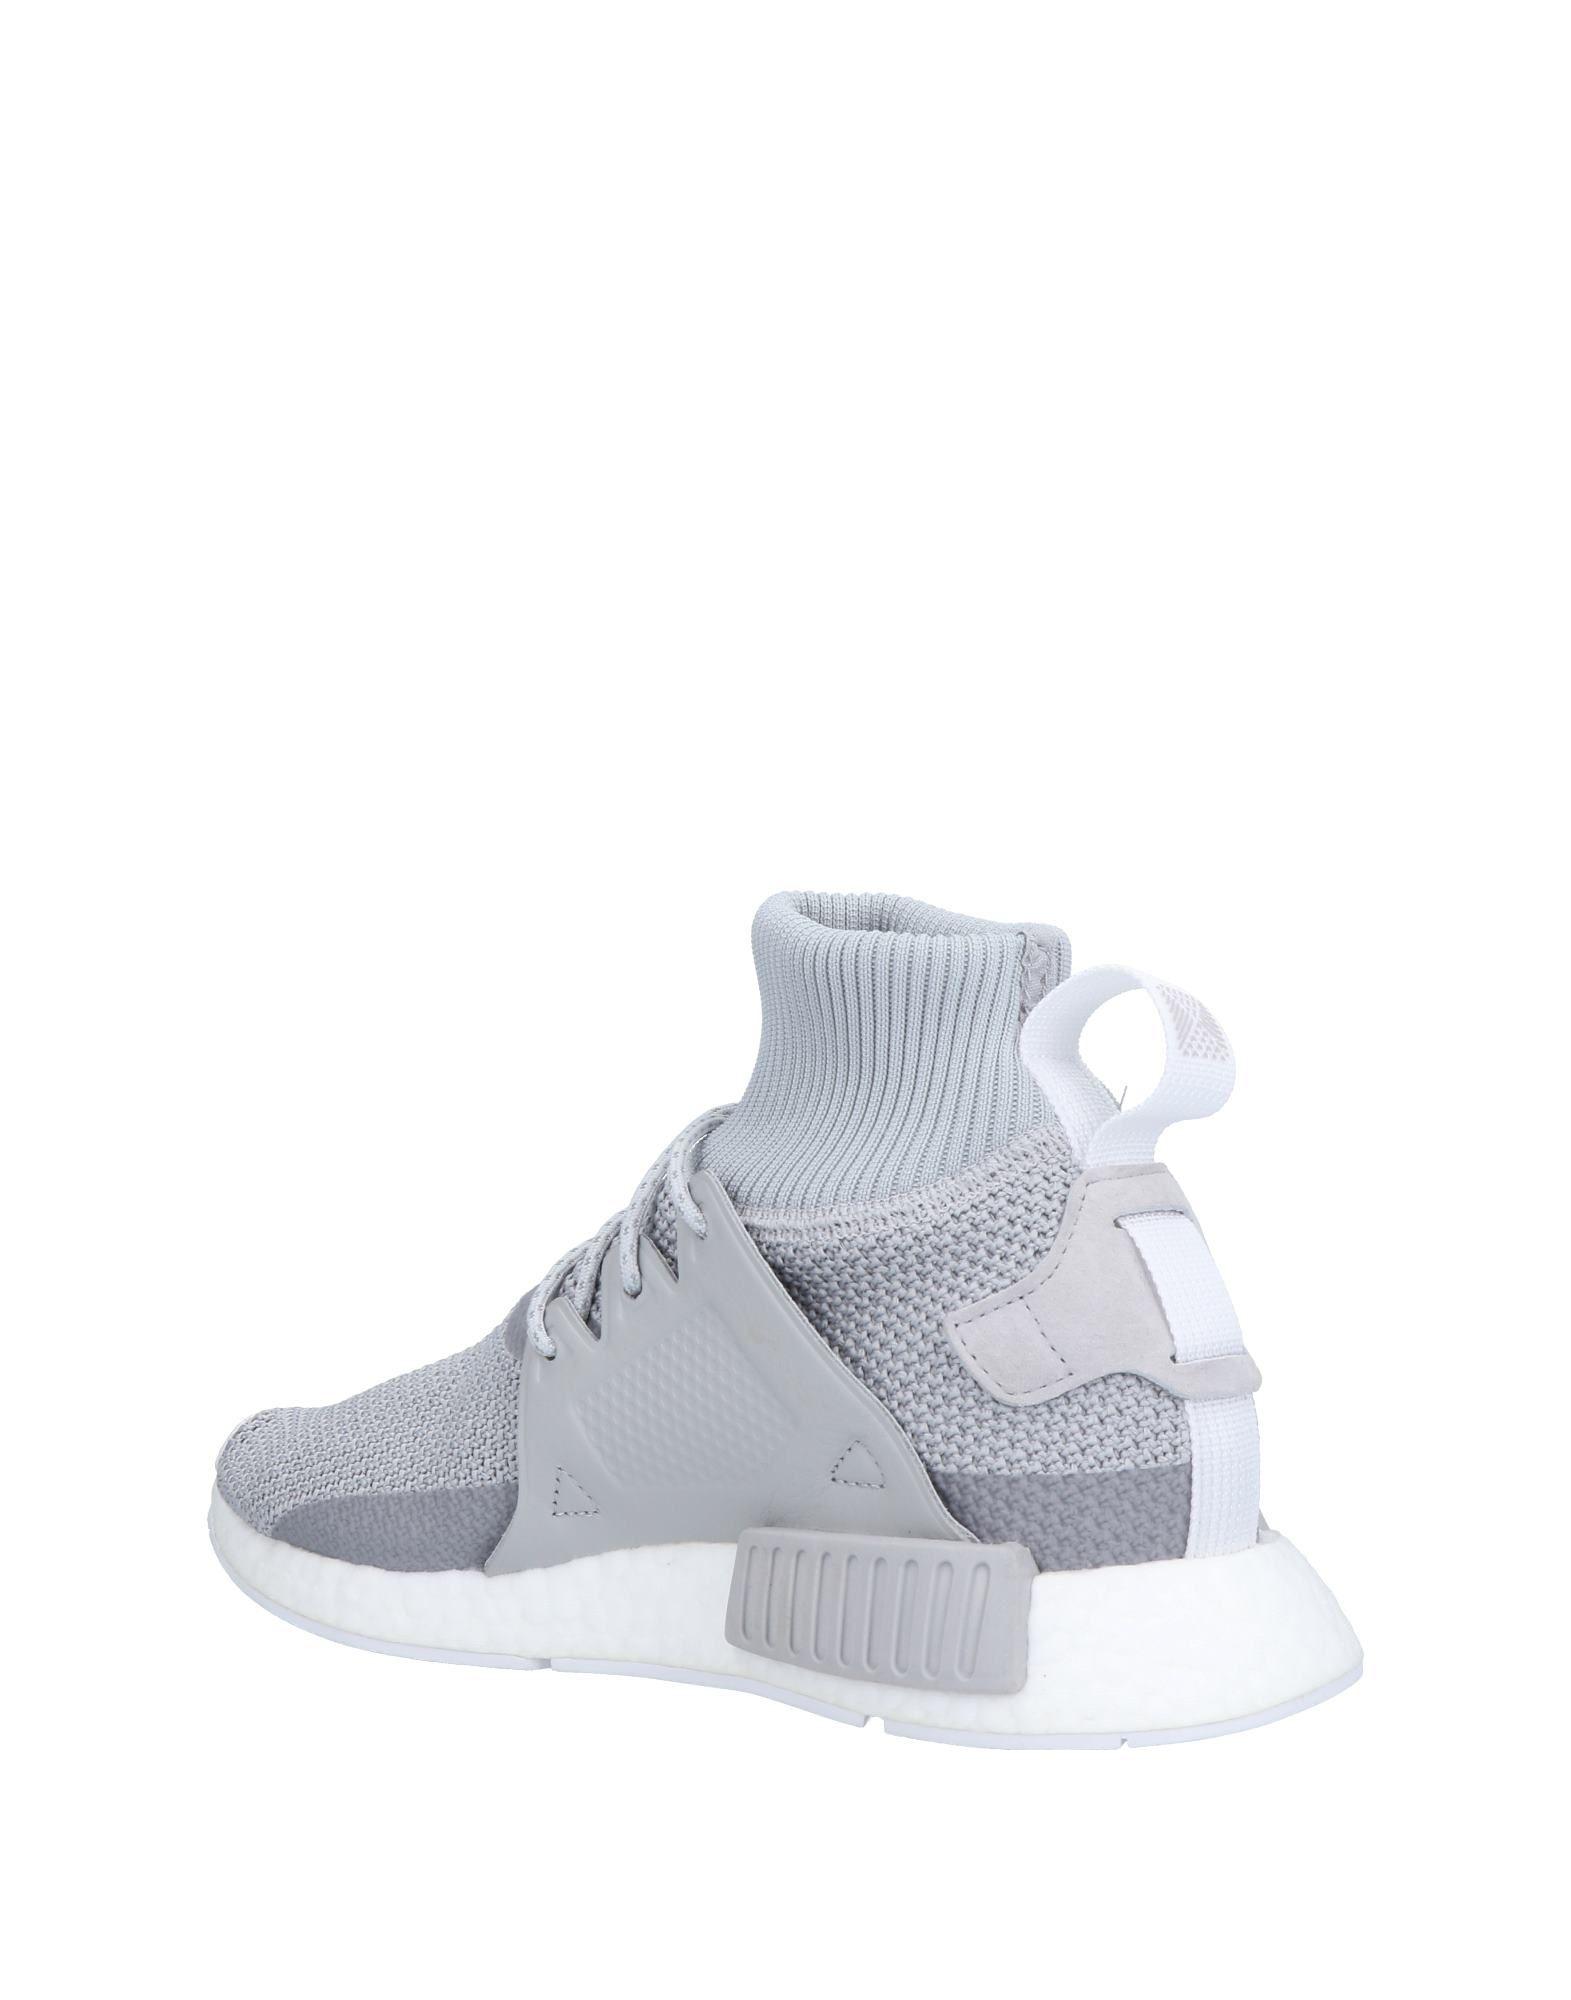 adidas Originals High-tops & Sneakers in Light Grey (Gray) for Men - Lyst